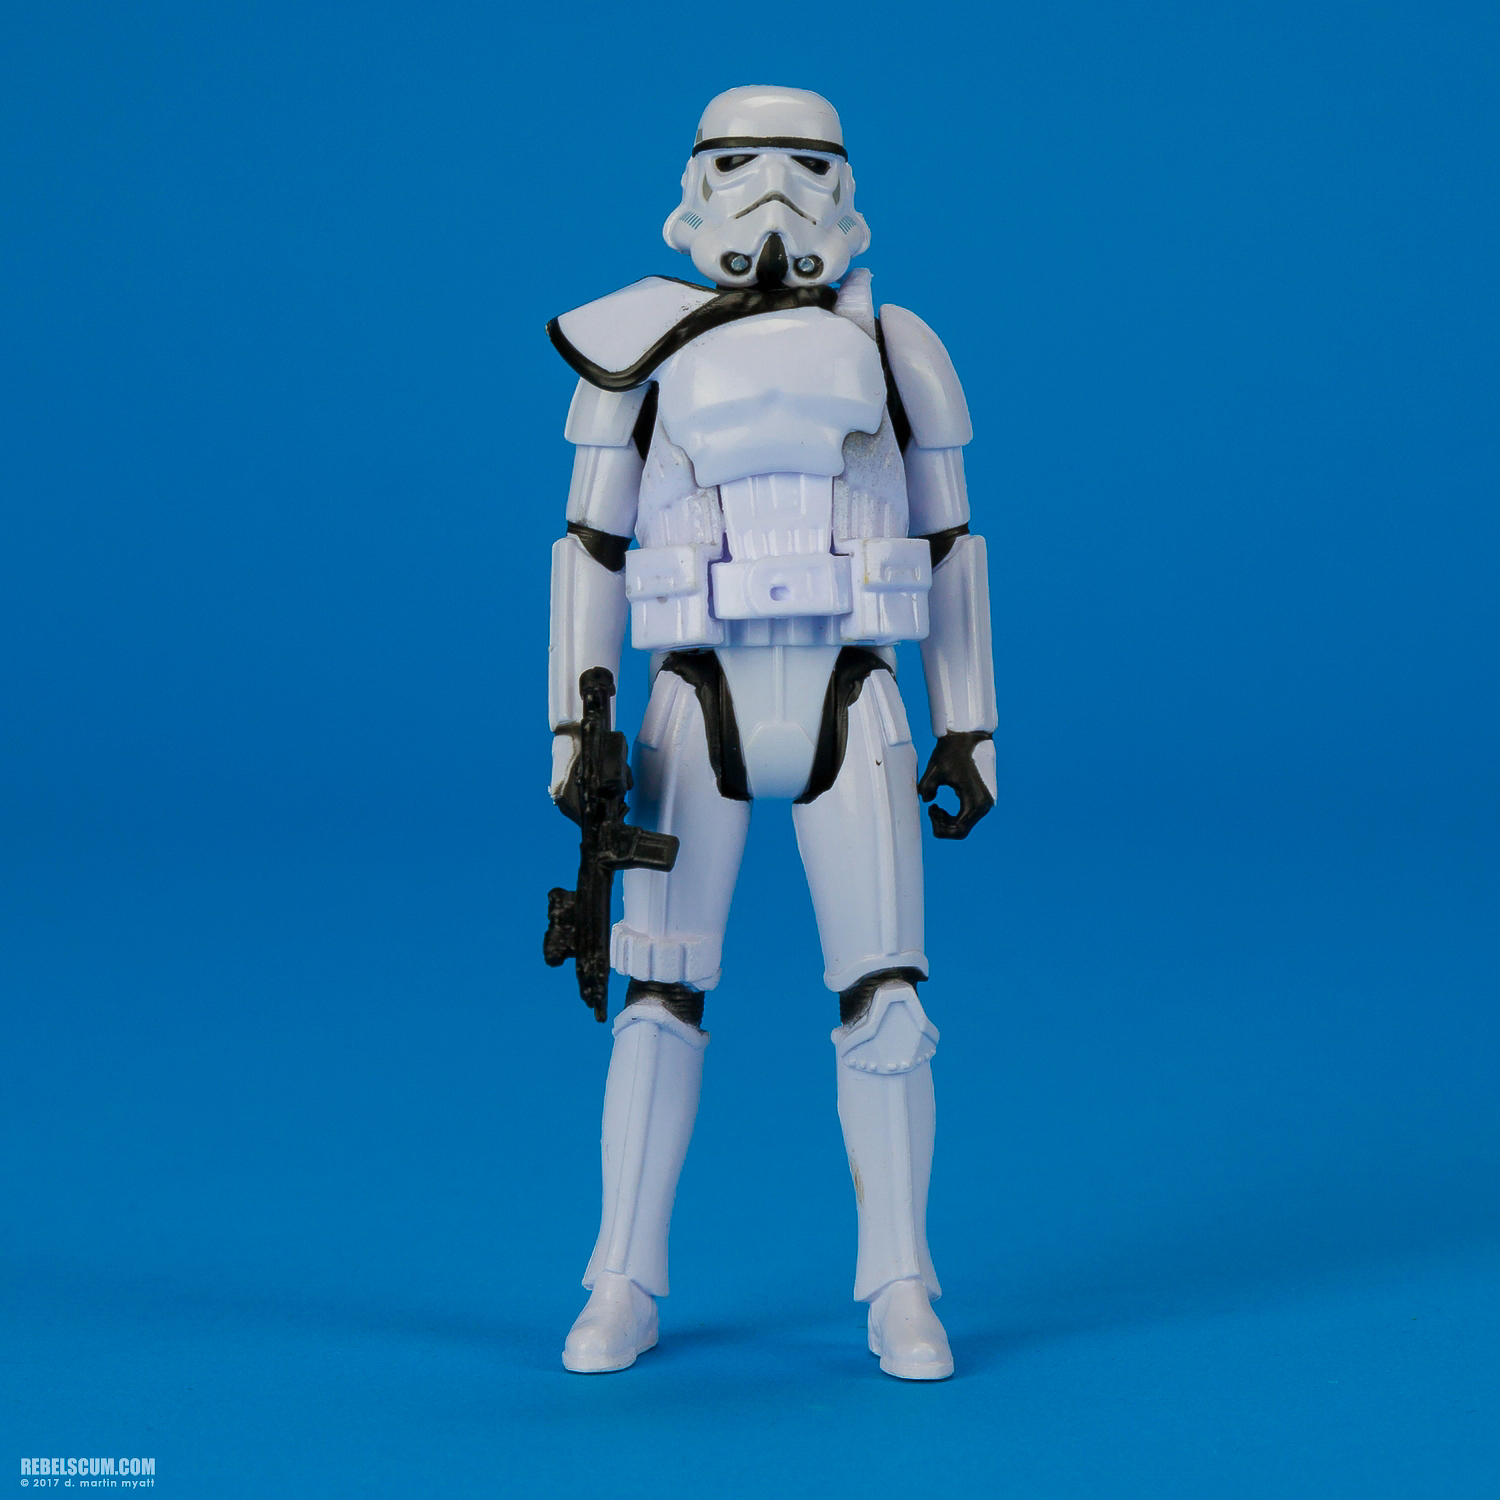 Captain-Cassian-Andor-VS-Imperial-Stormtrooper-Hasbro-009.jpg